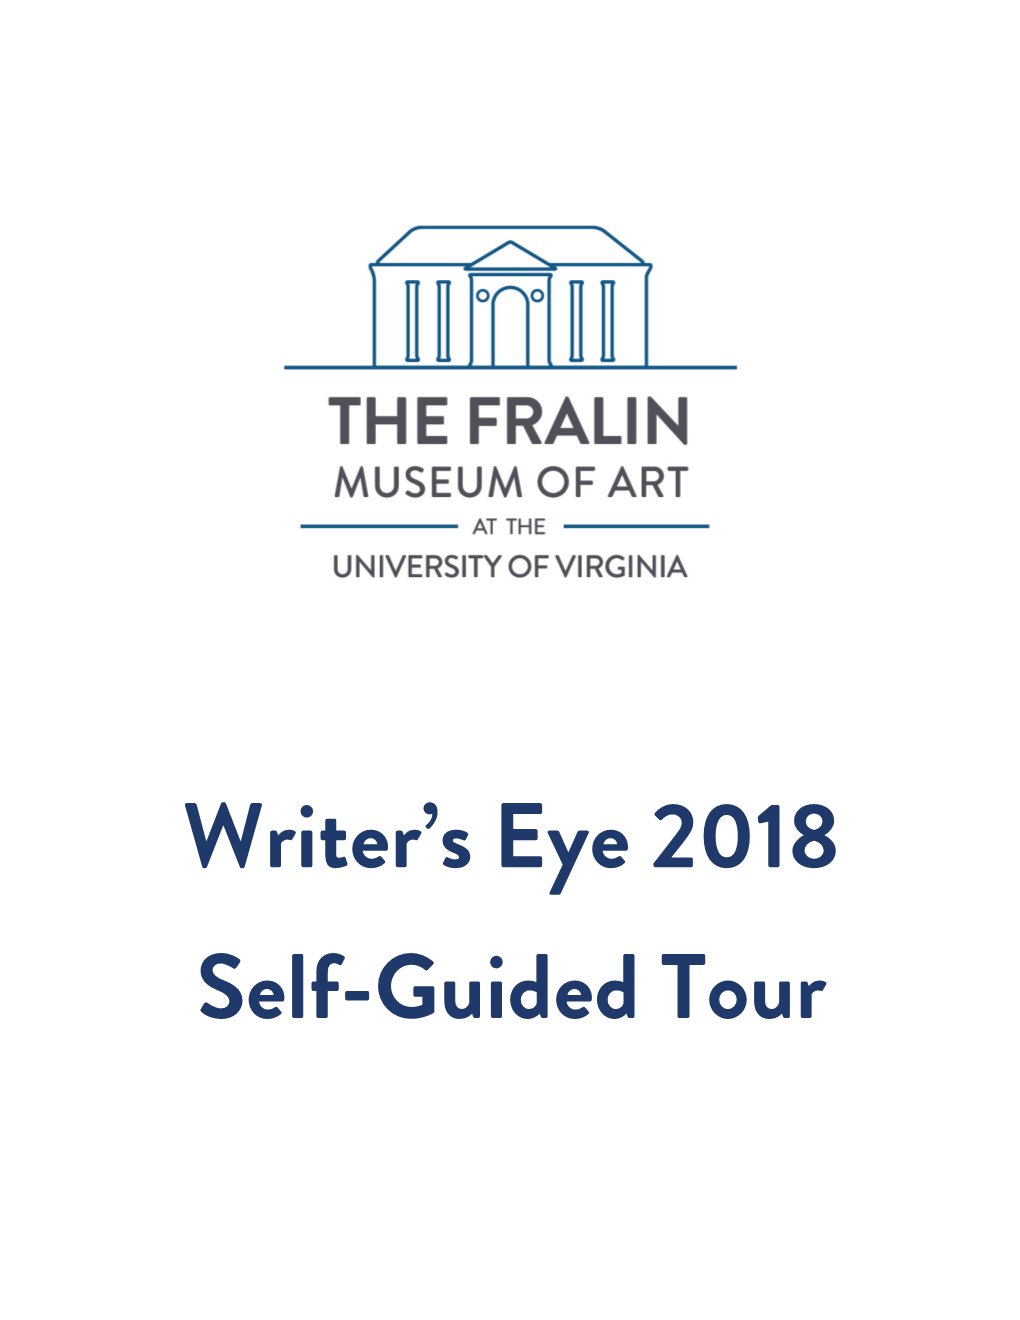 Writer's Eye 2018 Self-Guided Tour